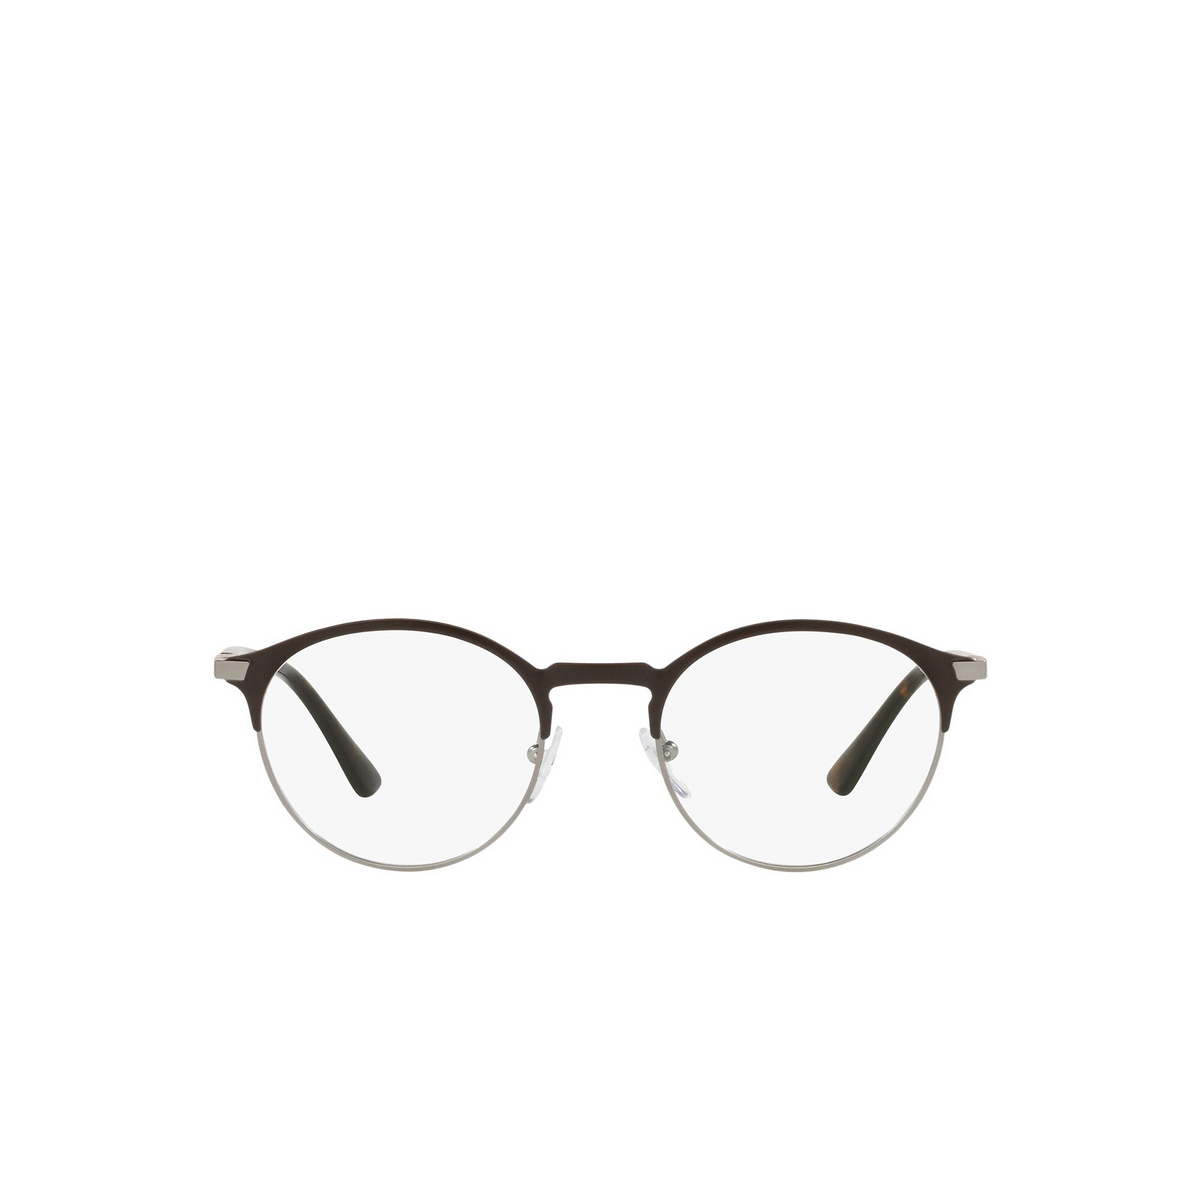 Prada® Round Eyeglasses: PR 58YV color Matte Brown 02Q1O1 - front view.